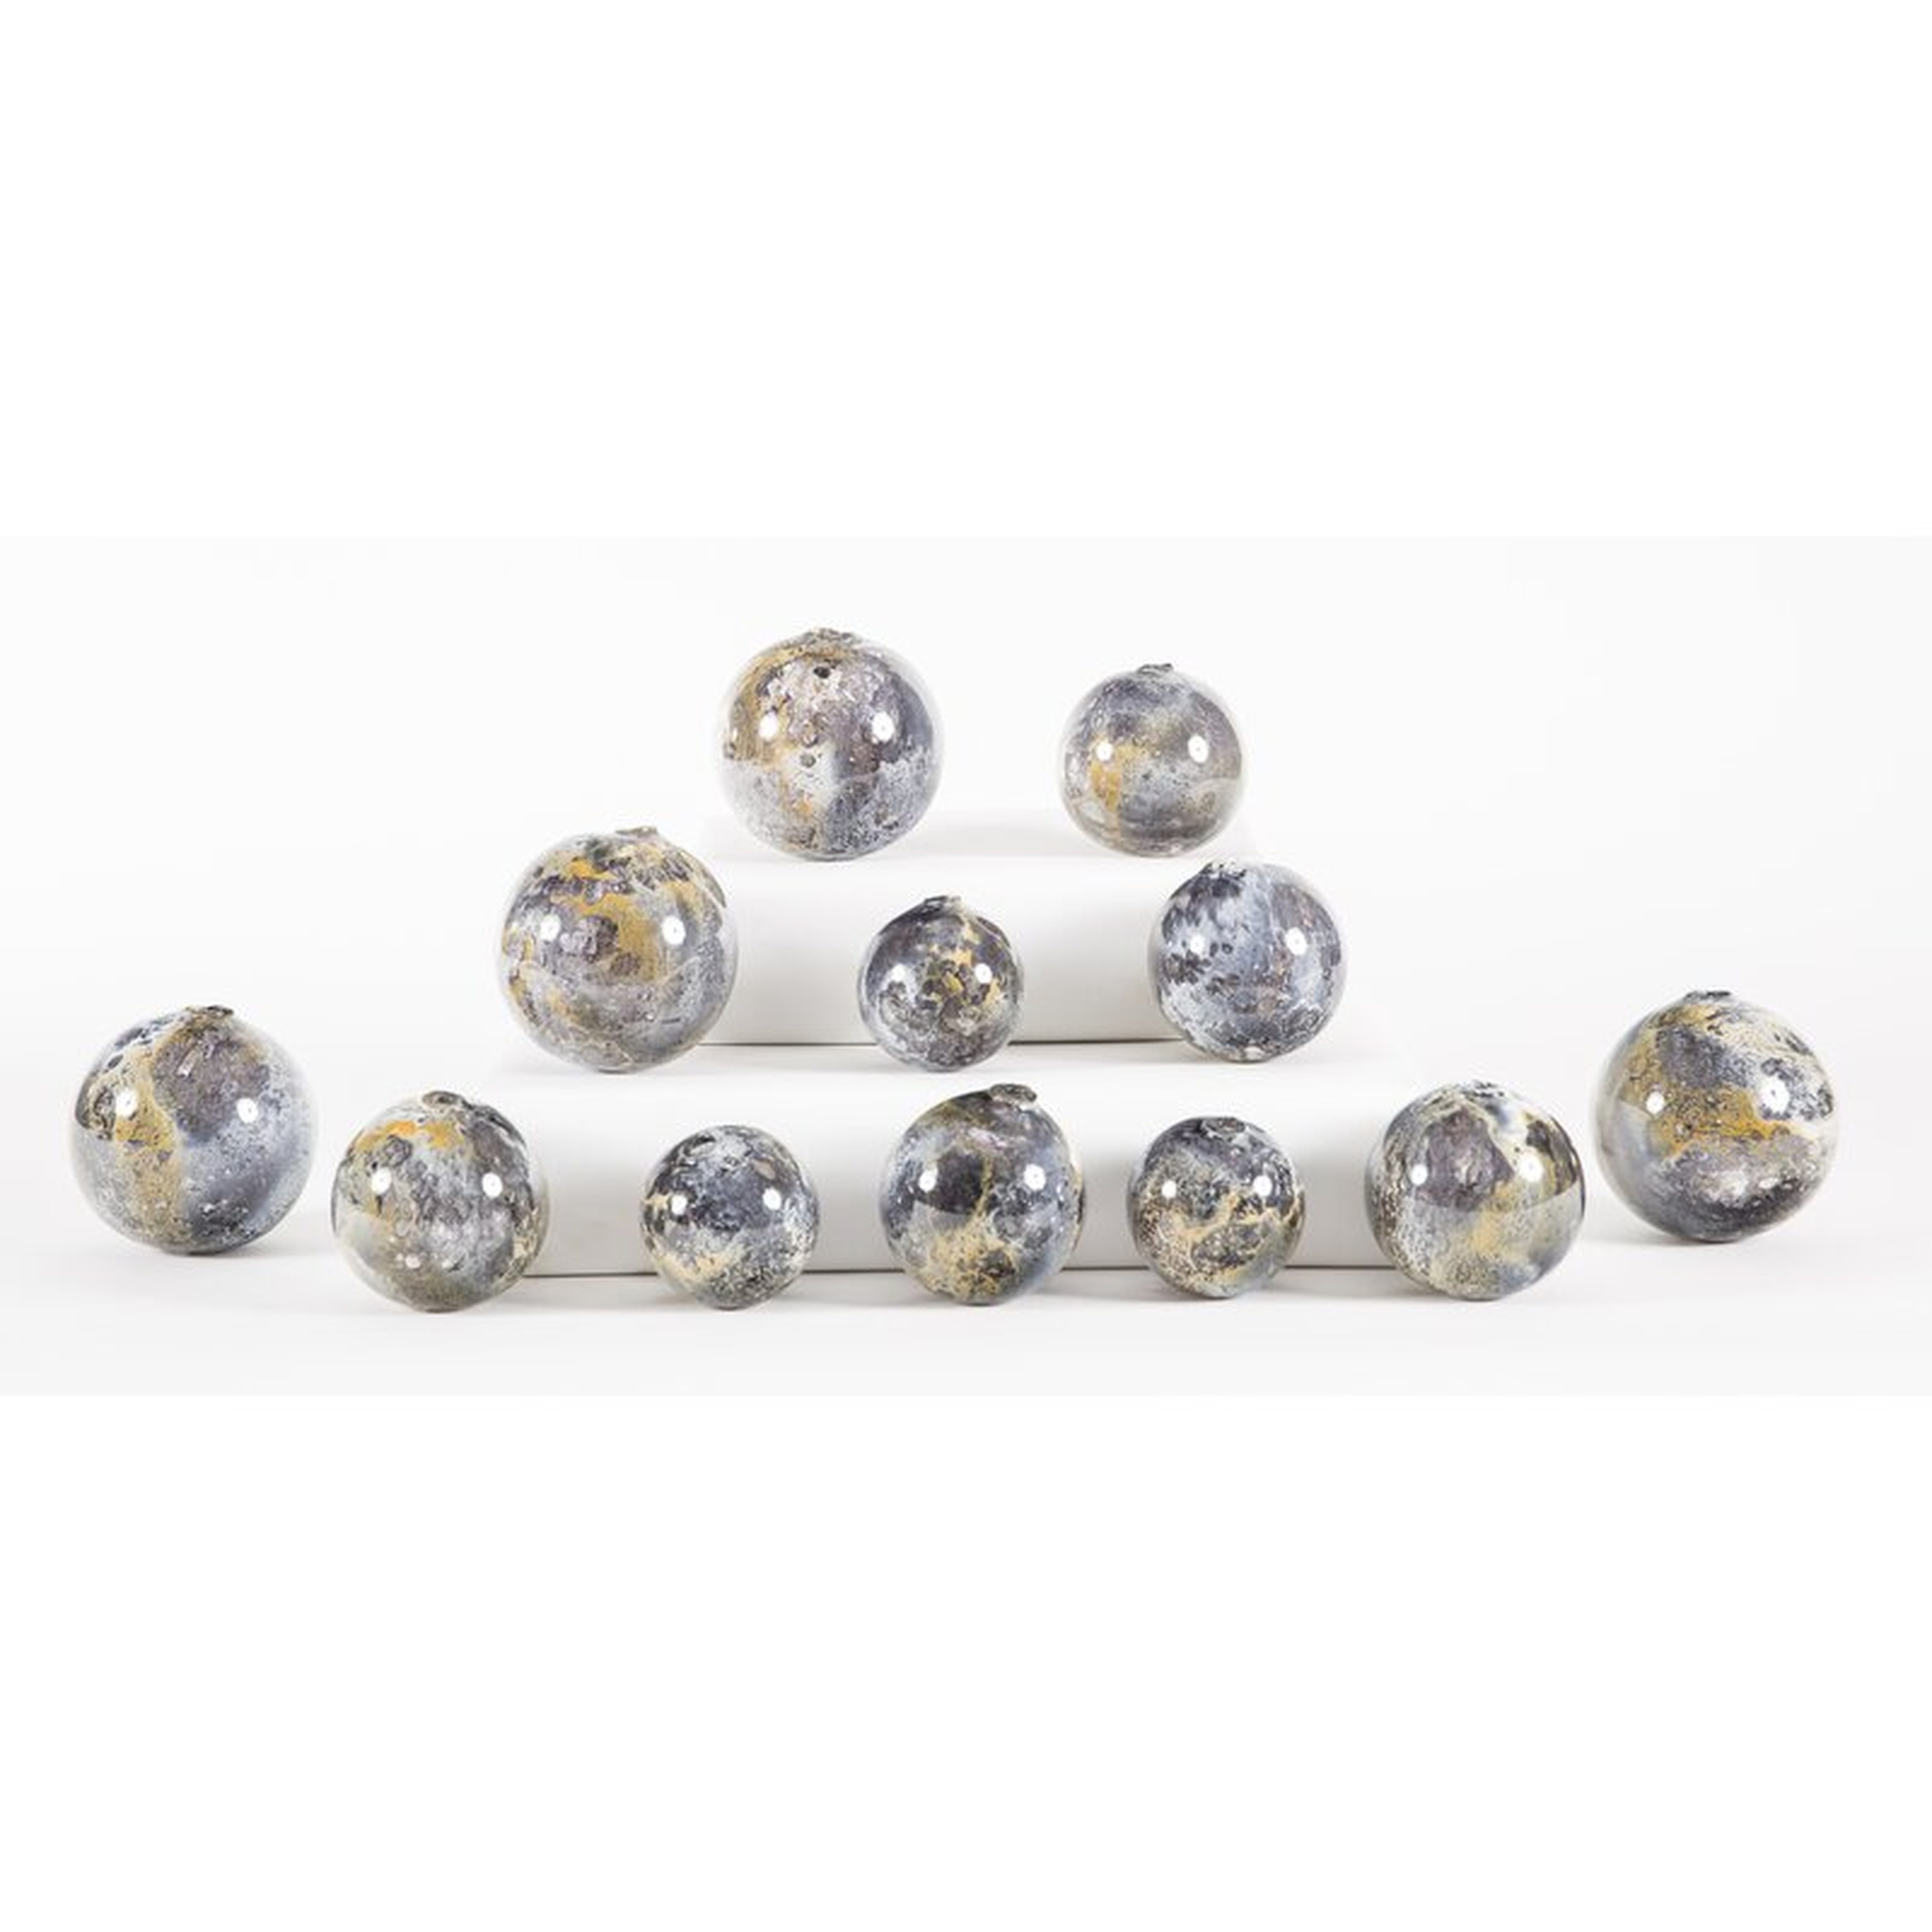 Prima Design Source 12 Piece Hand Blown Balls Decorative Spheres Sculpture Set - Perigold